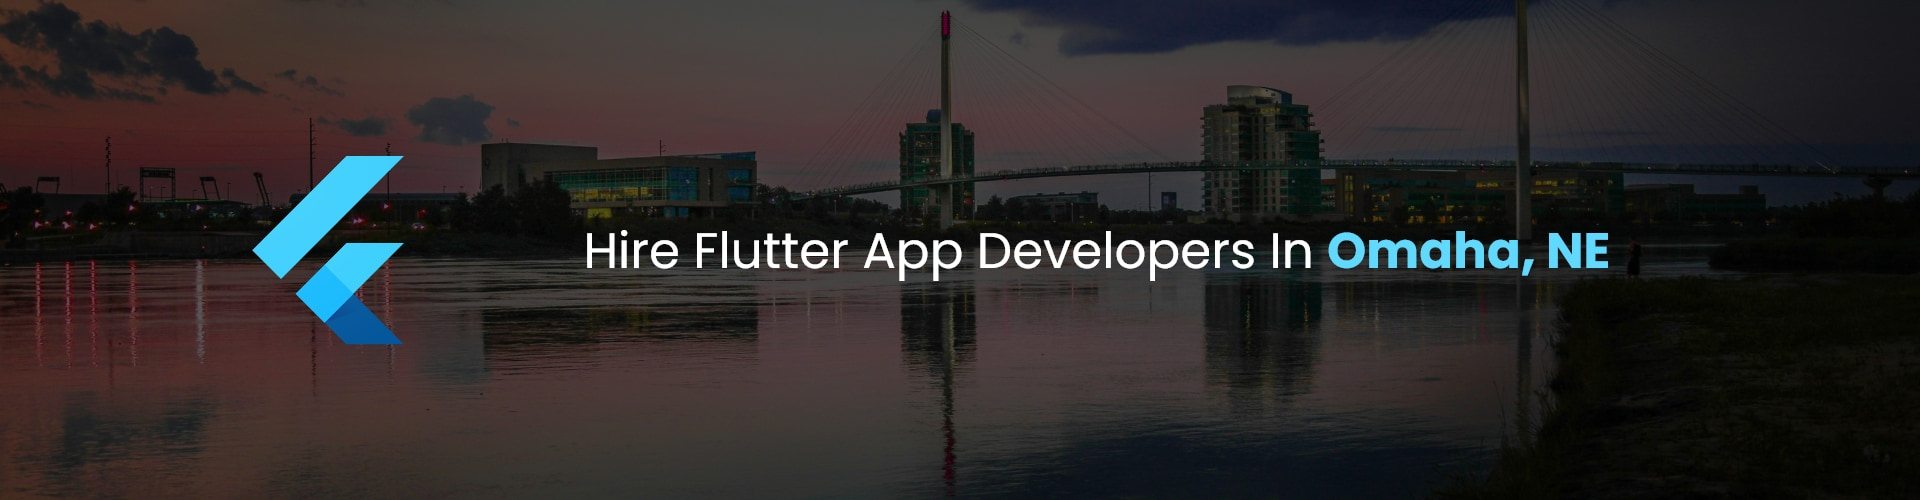 hire flutter app developers in omaha